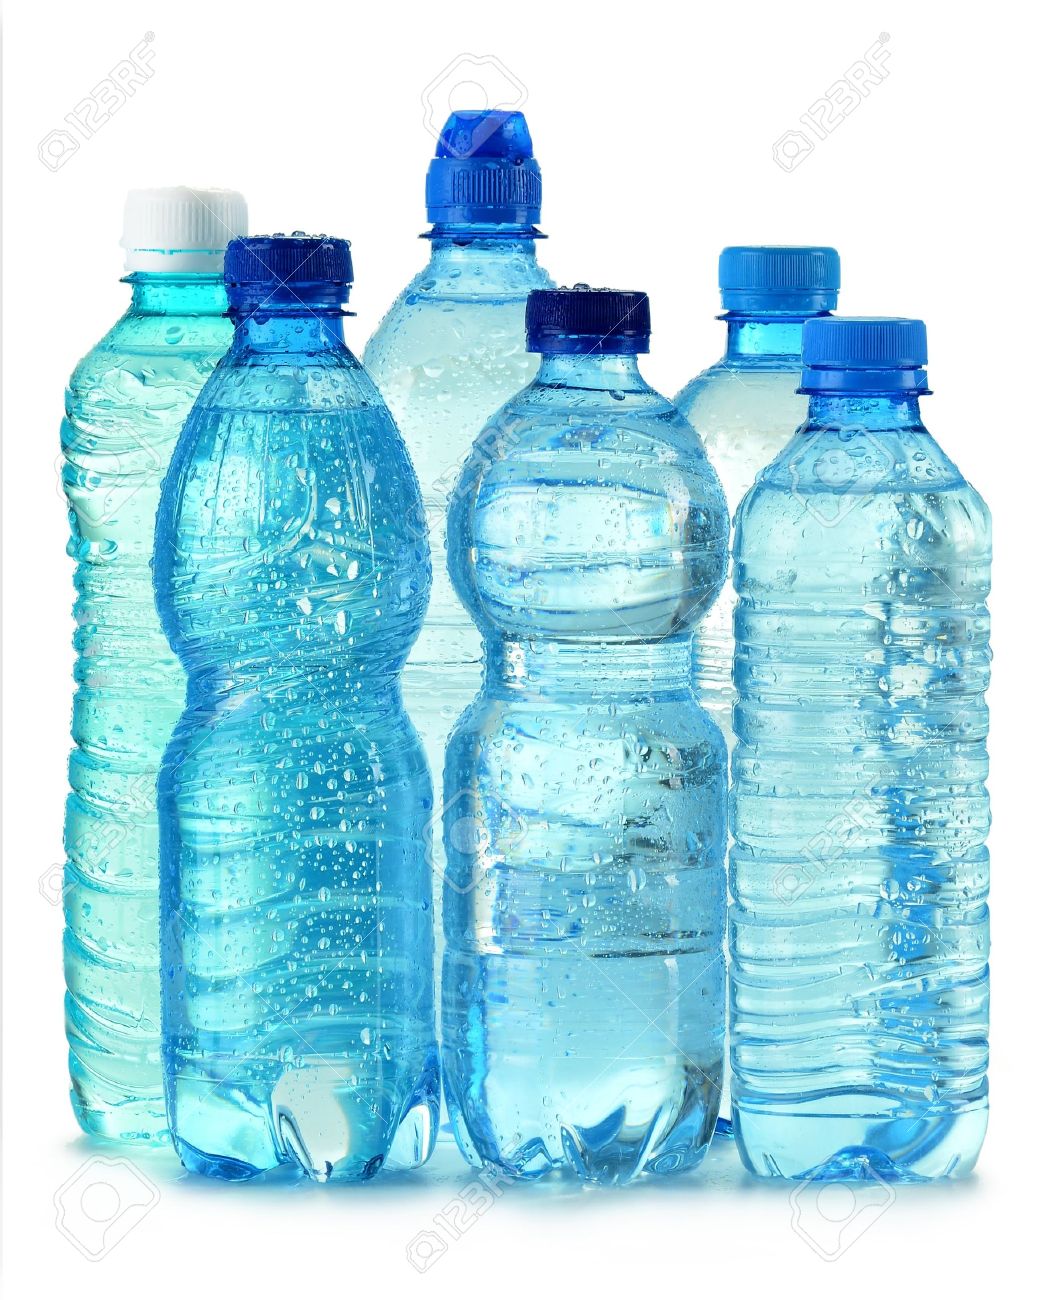 10069237-Polycarbonate-plastic-bottles-o